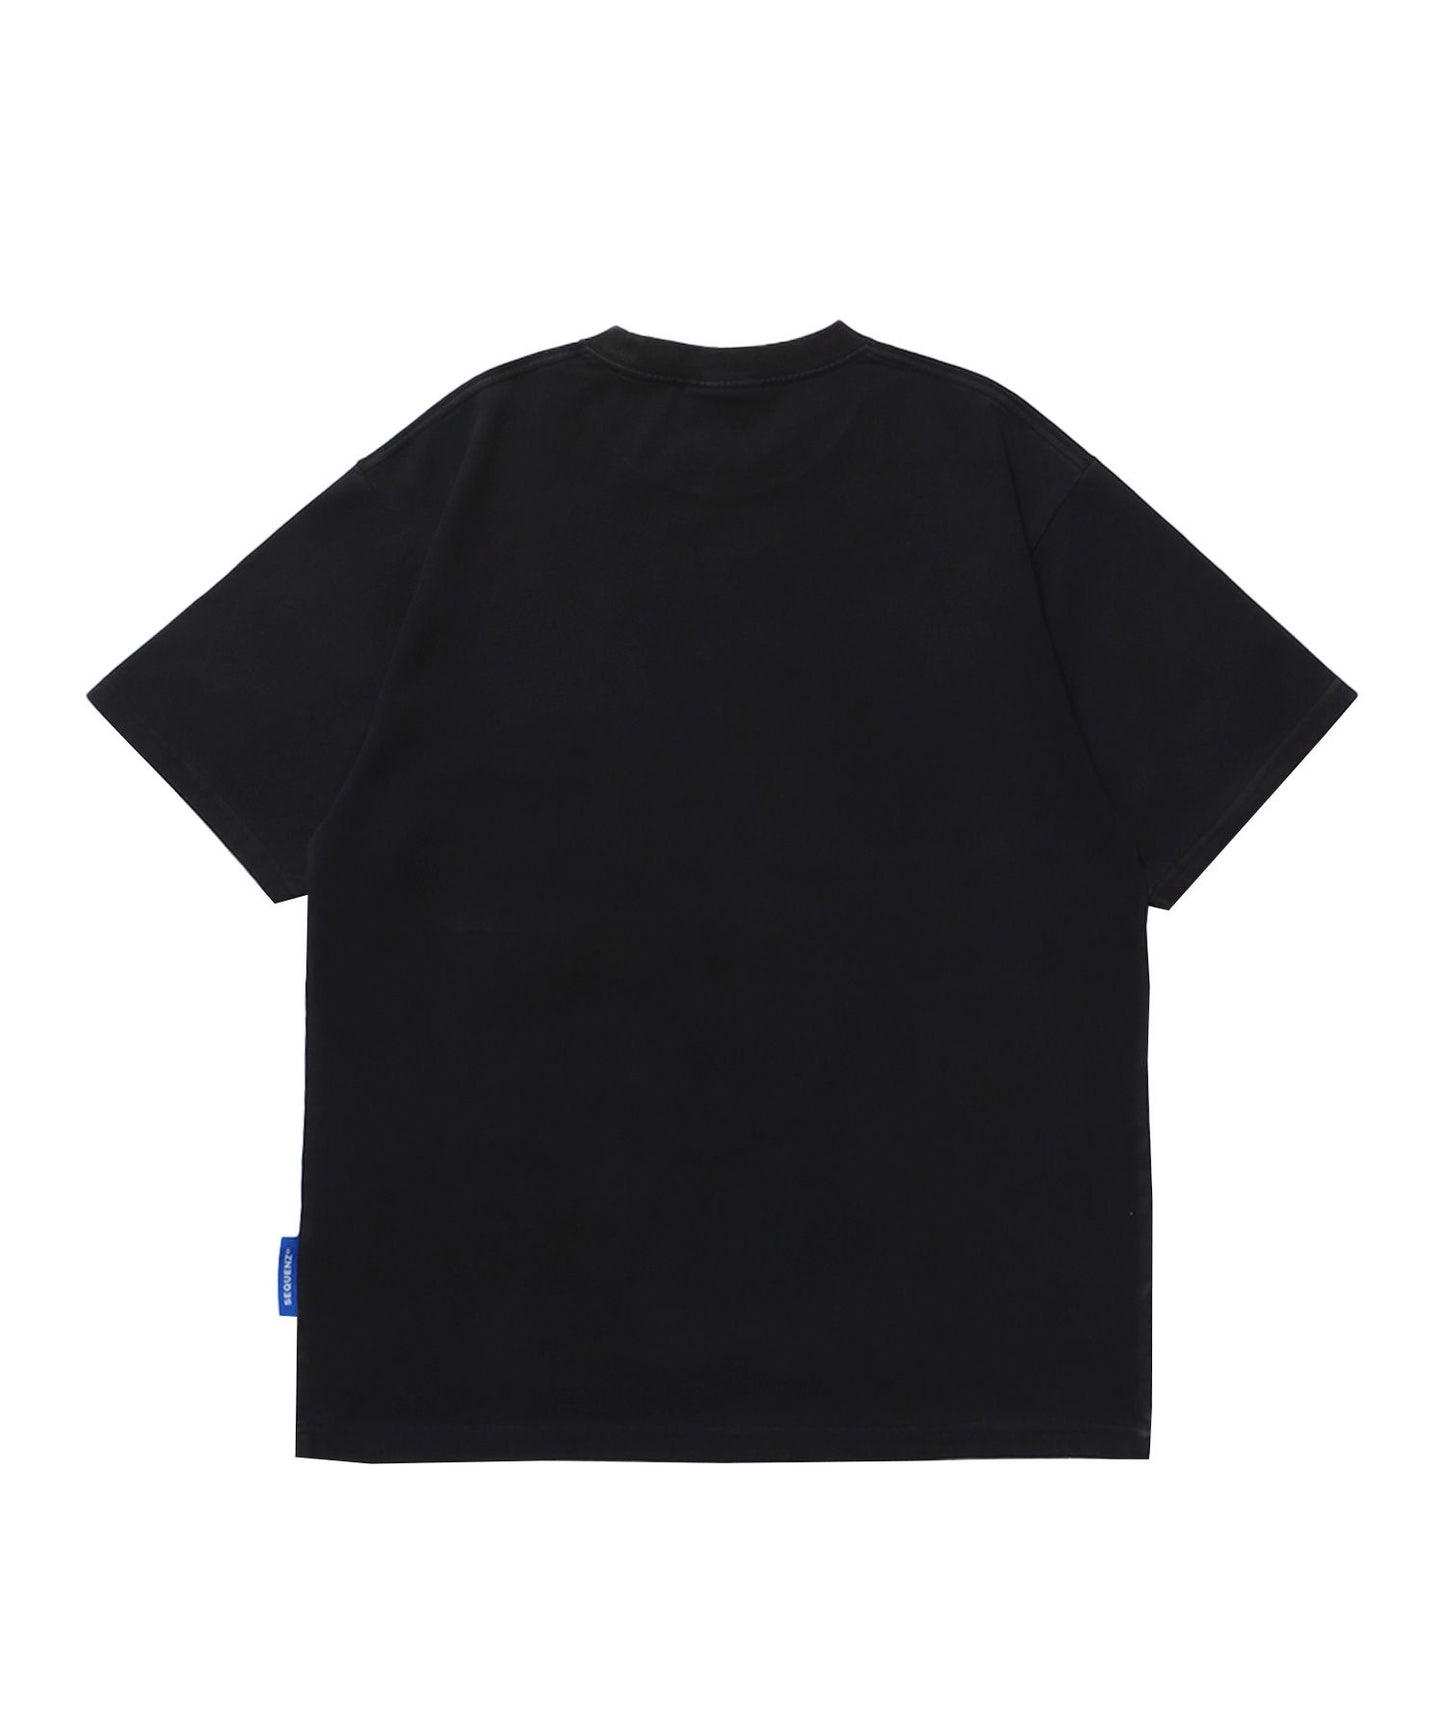 NVL EX COOLAGE SST / 半袖Tシャツ クルーネック ブランドロゴ ハードバイオ ダイス フラワー ブラック